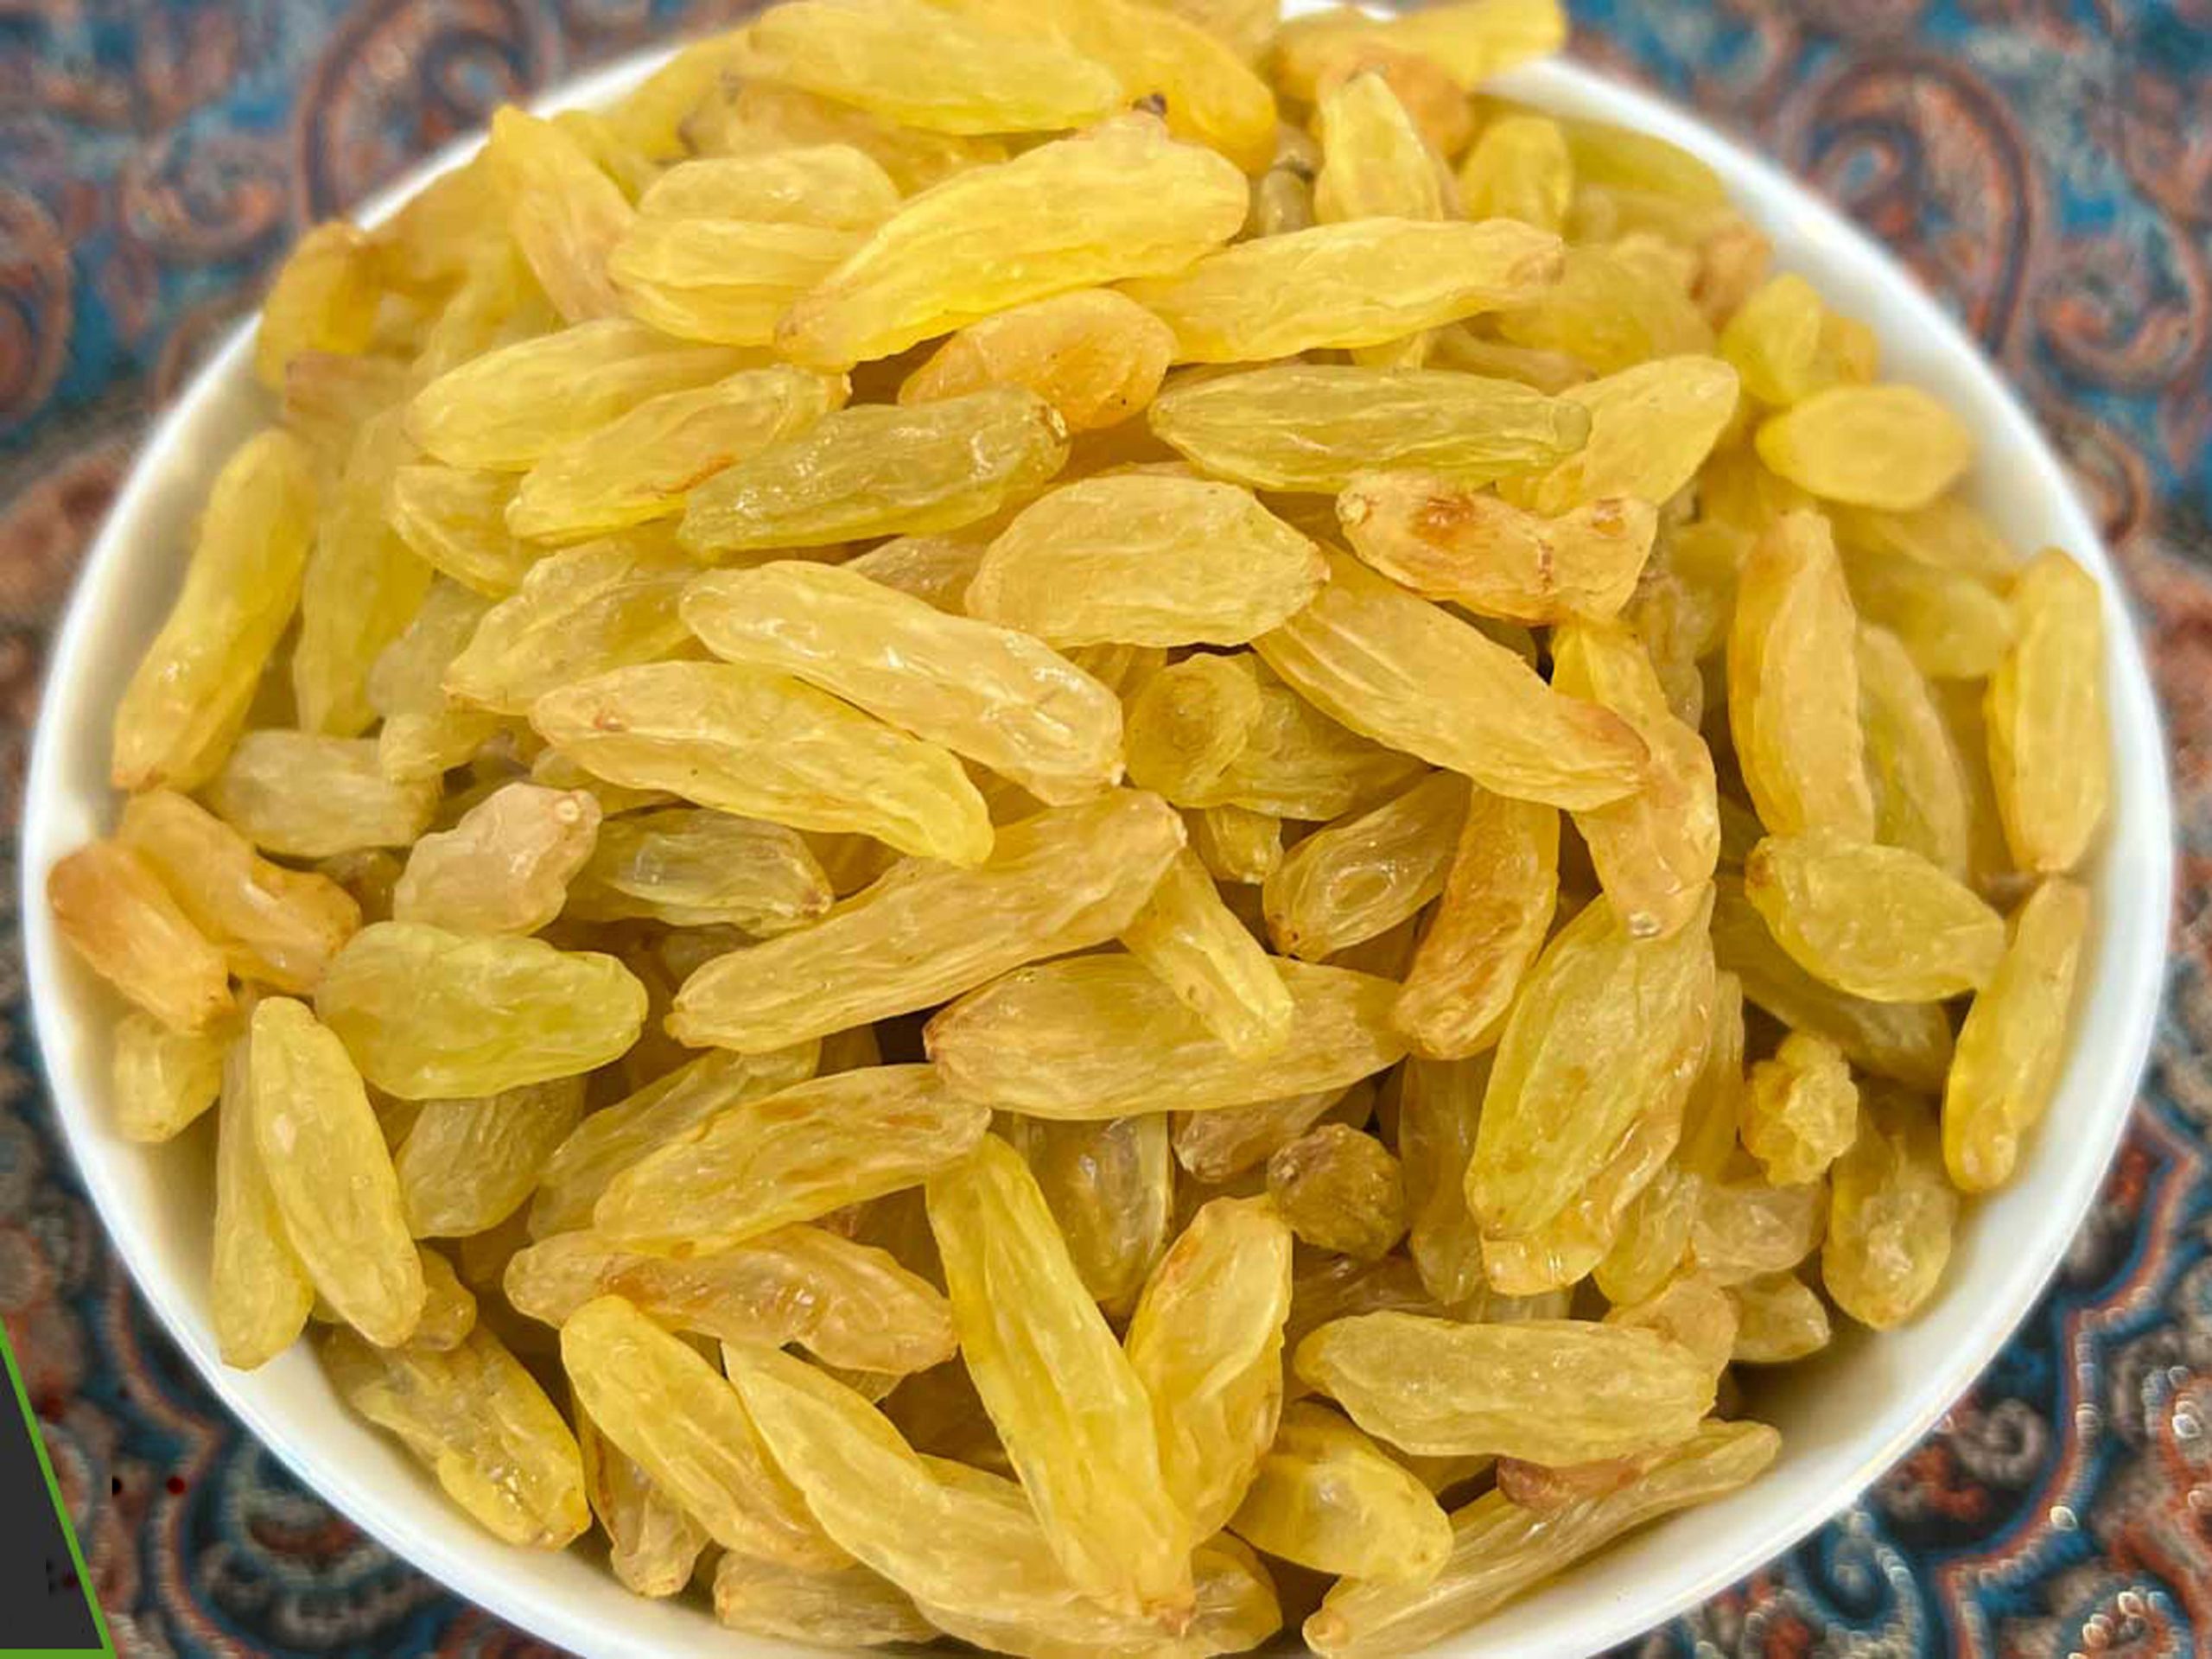 Iran Golden Raisins Price - Buy & Price Best Organic Kashmari Golden Raisins - Nutex Dried Fruits